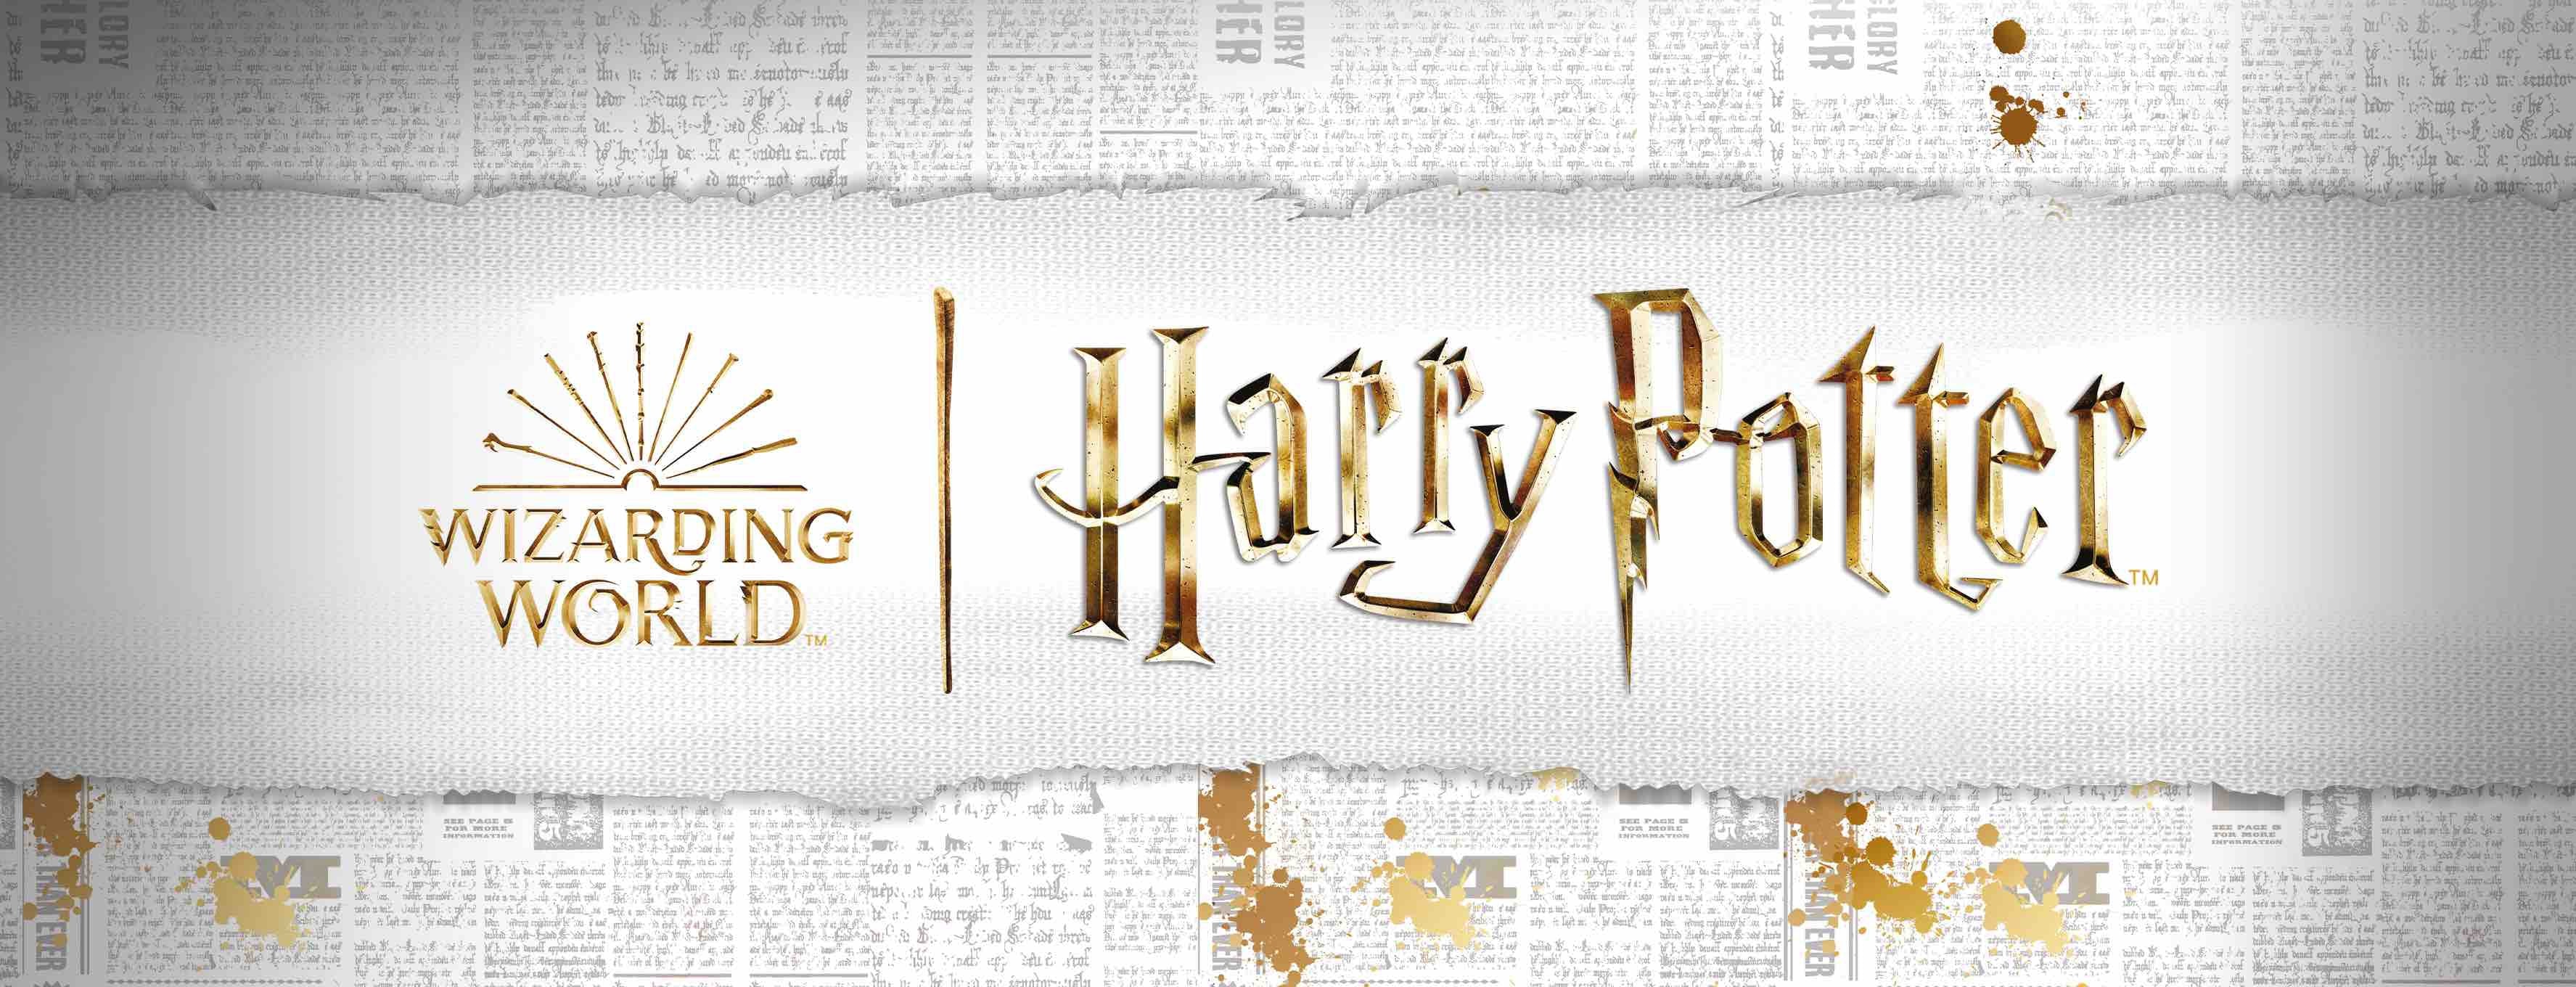 Cable Guy Ikon soporte sujecion Hogwarts Harry Potter 20cm